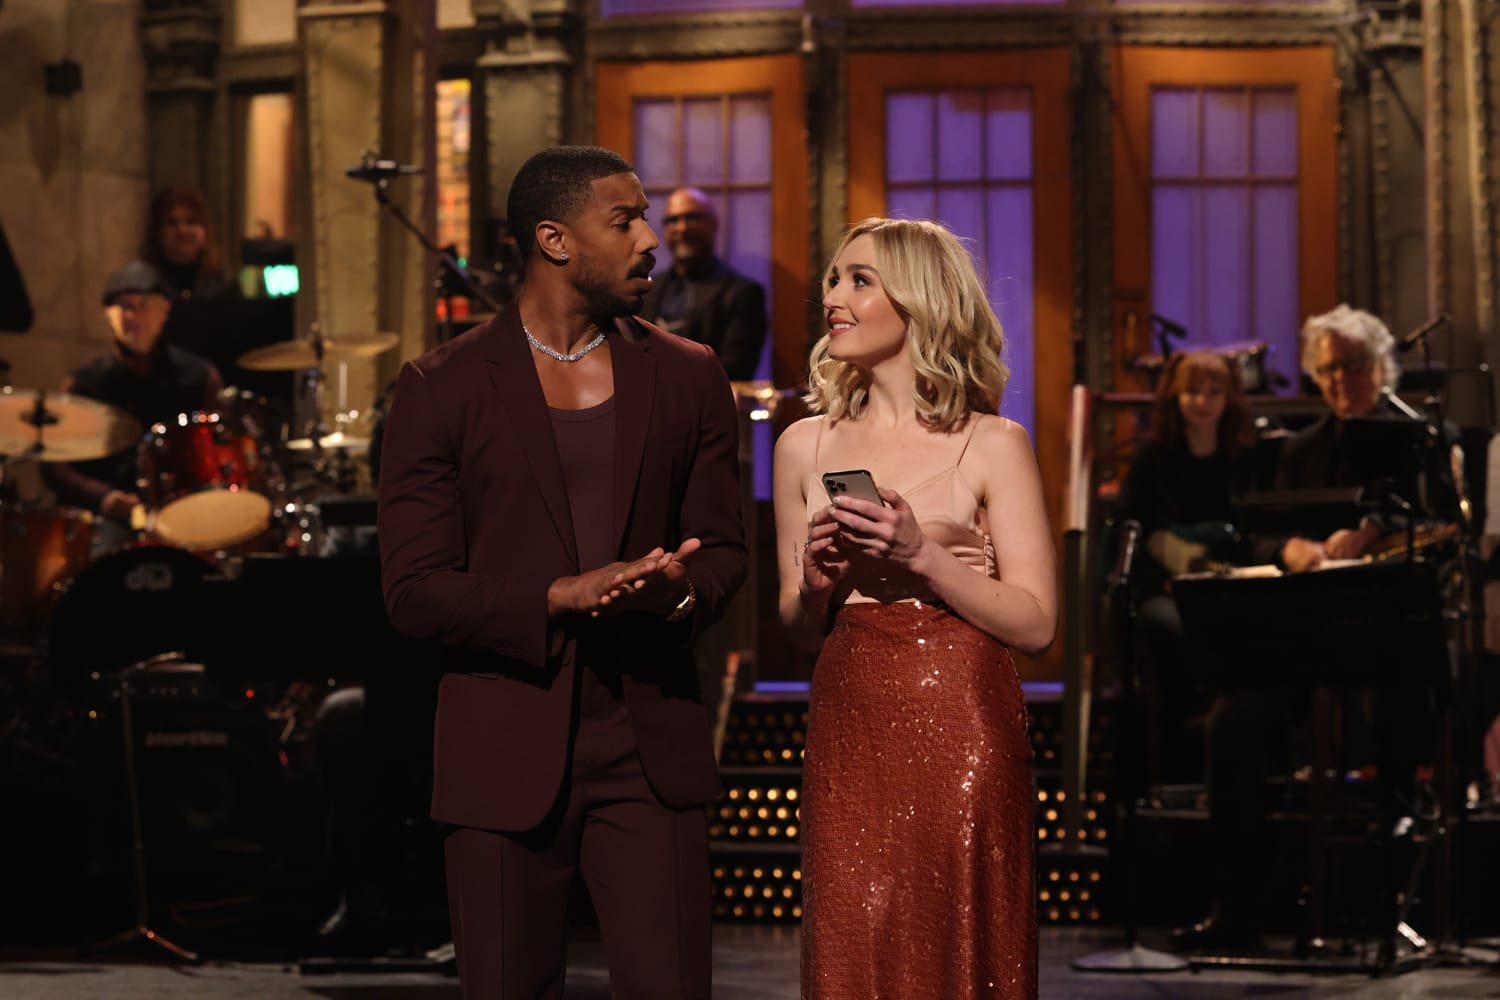 Michael B. Jordan To Make 'Saturday Night Live' Hosting Debut As Lil Baby  Performs